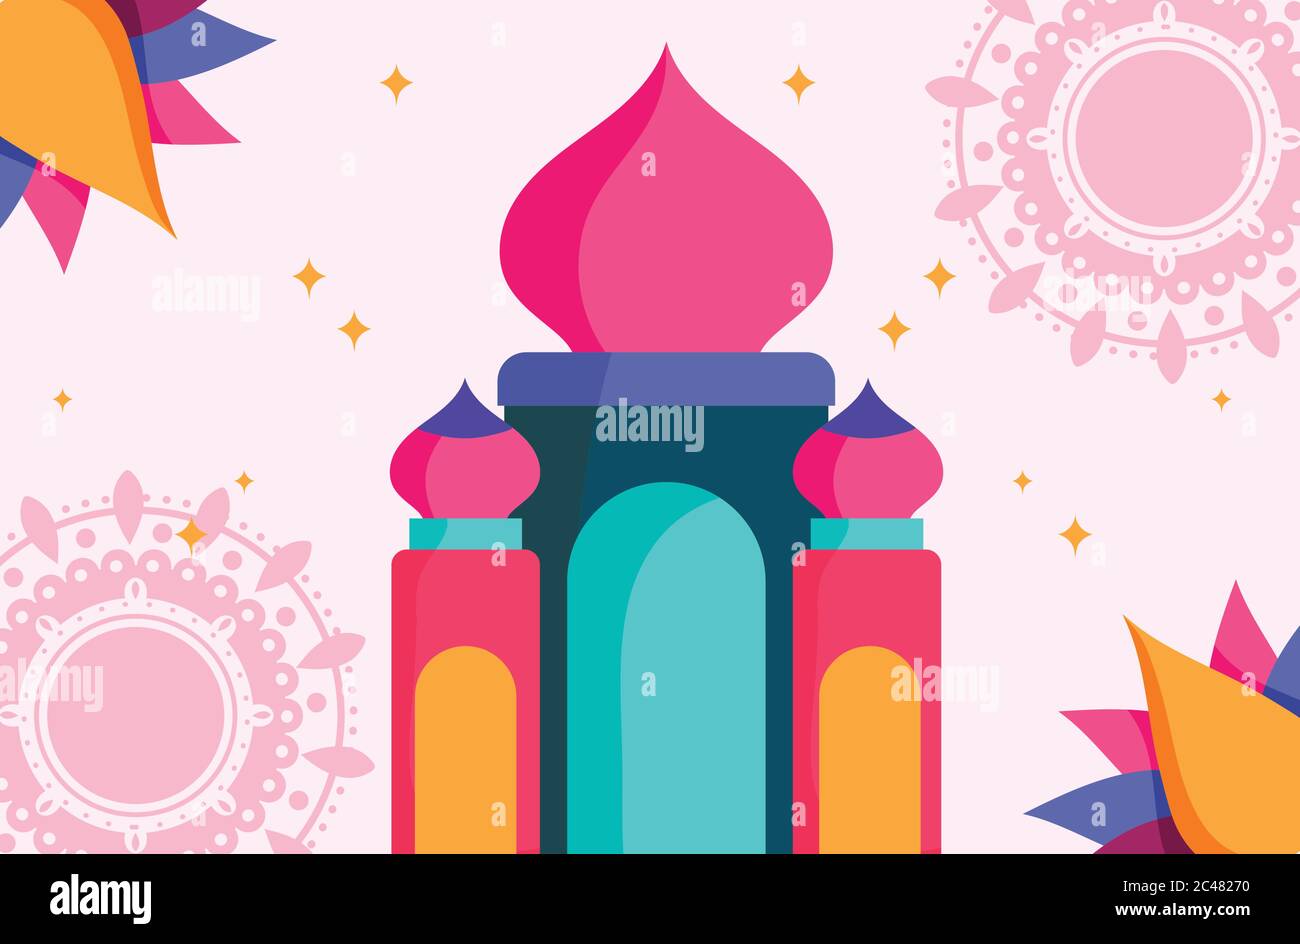 Happy Independence Day indien, farbige taj mahal und Blumen mit Mandalas Hintergrund Vektor Illustration Stock Vektor